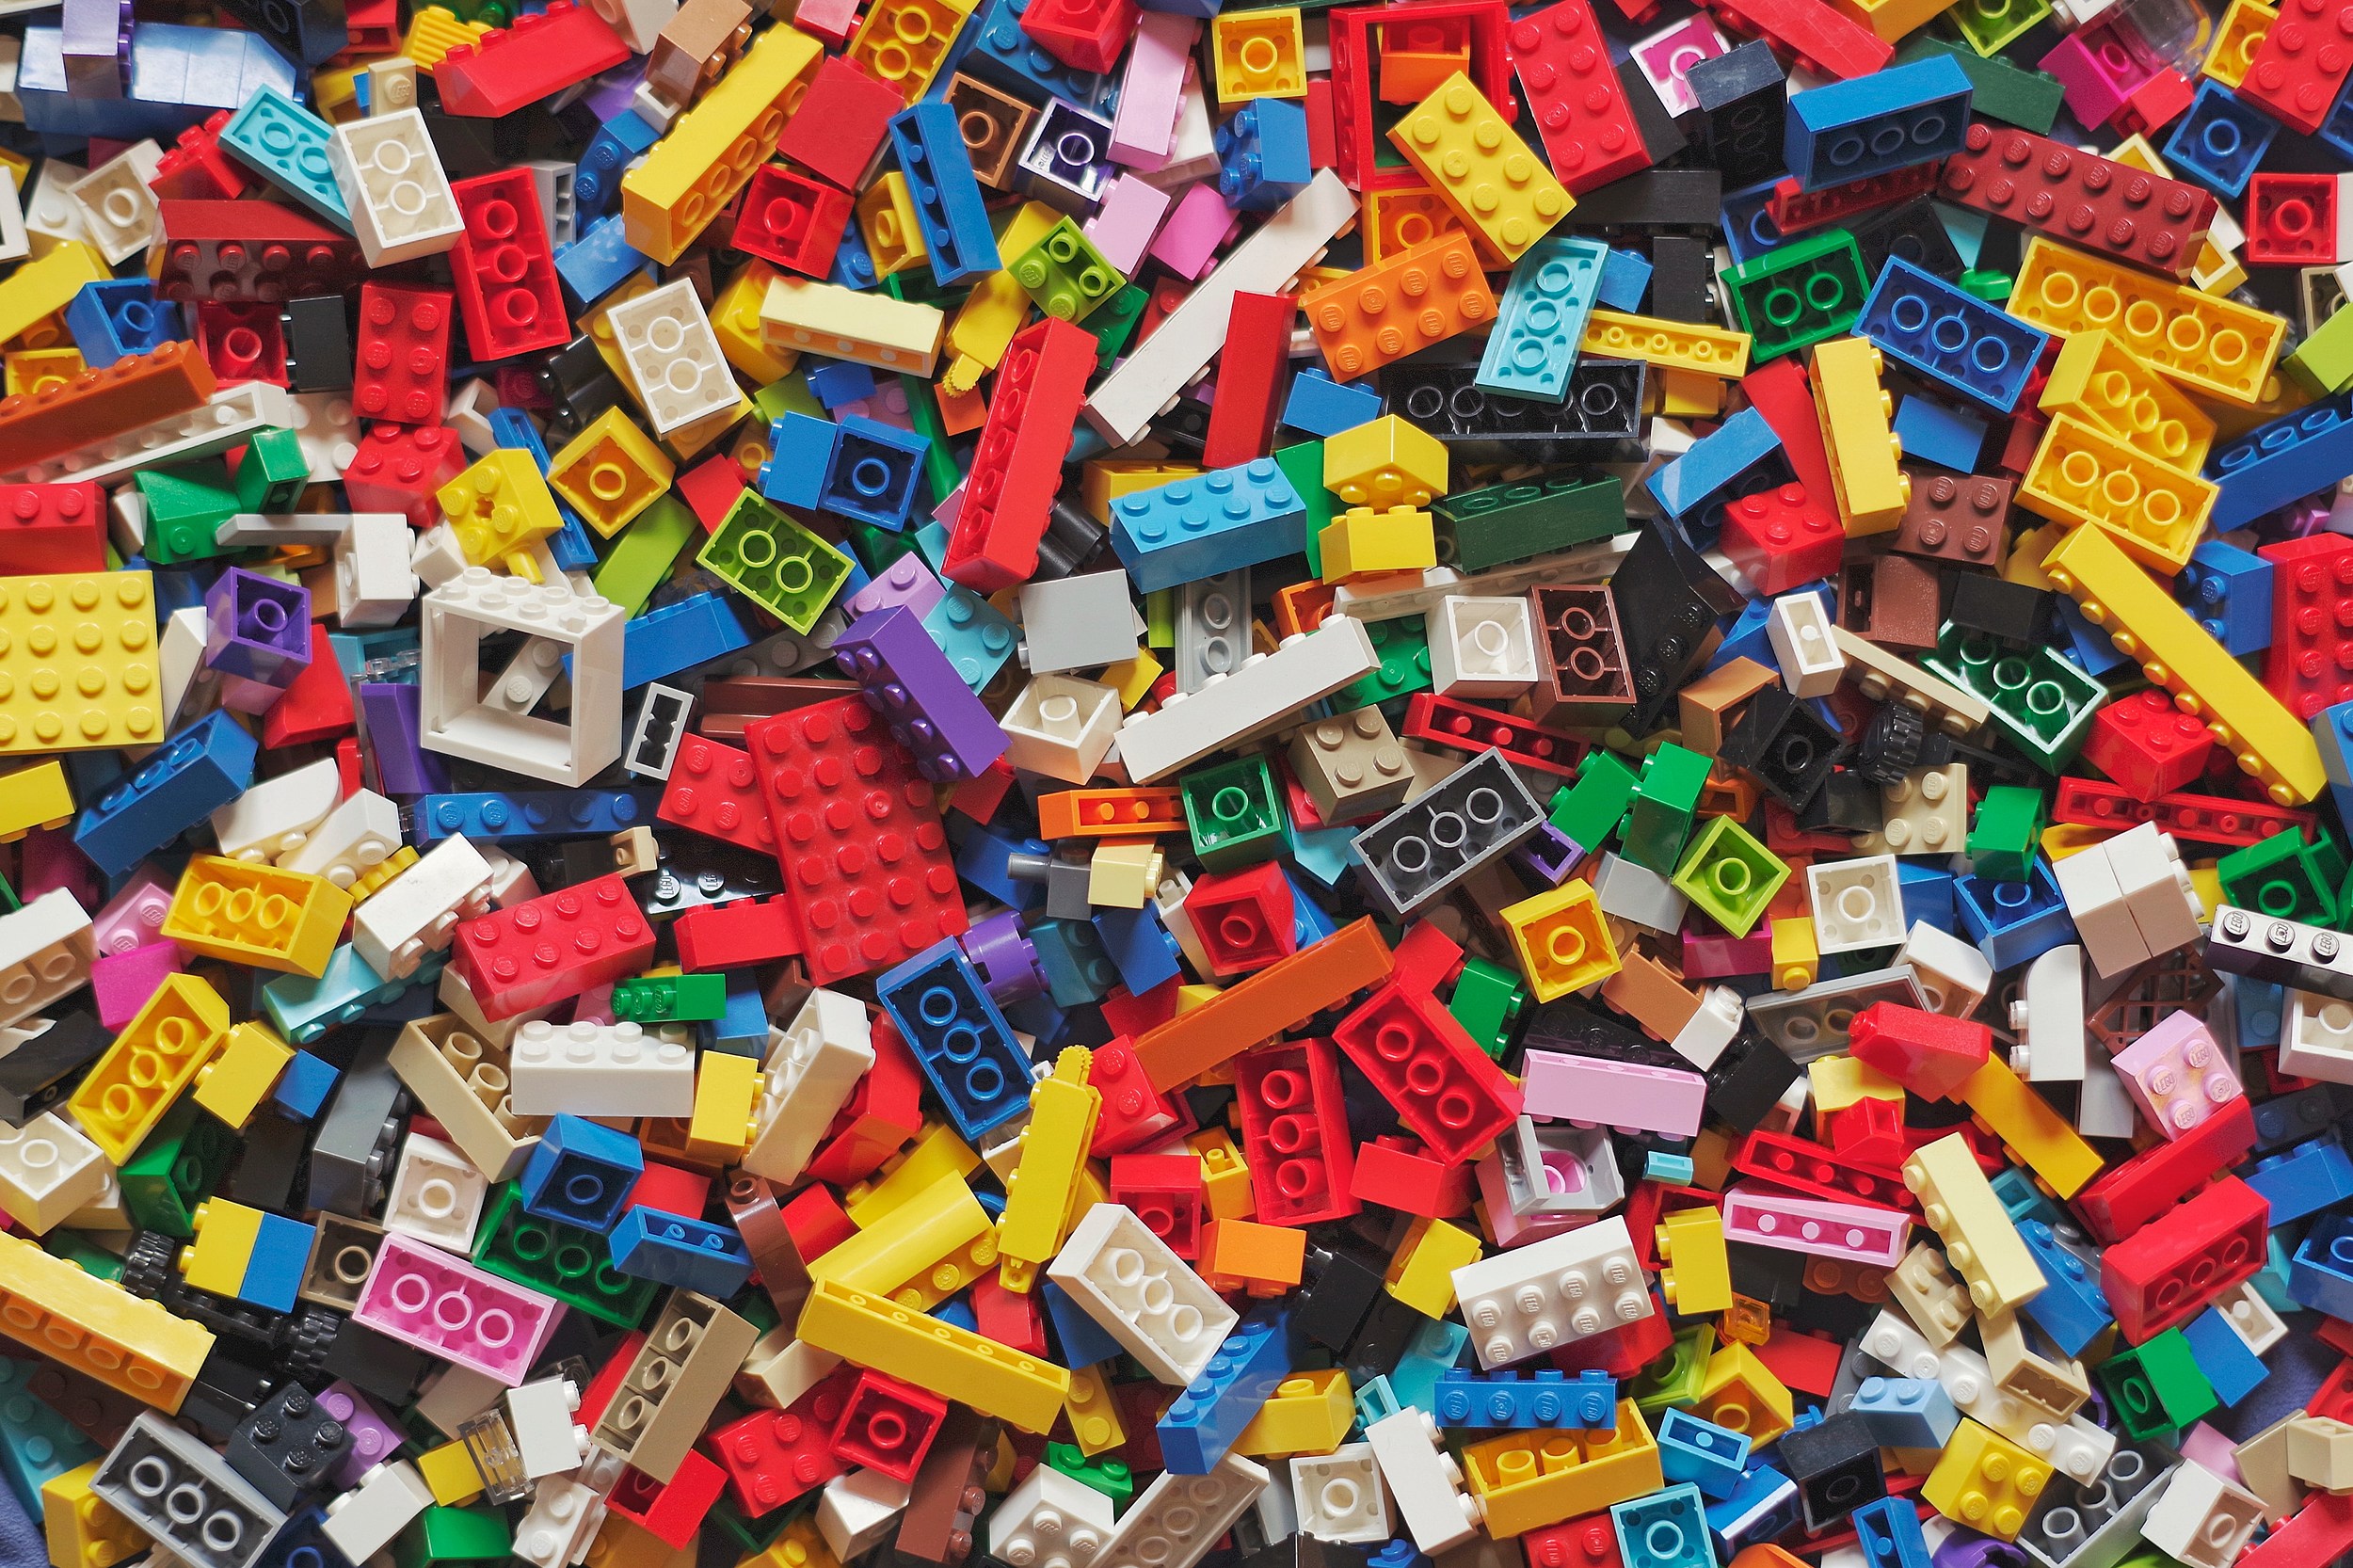 New Hudson Valley Store Big for Lego Bricks